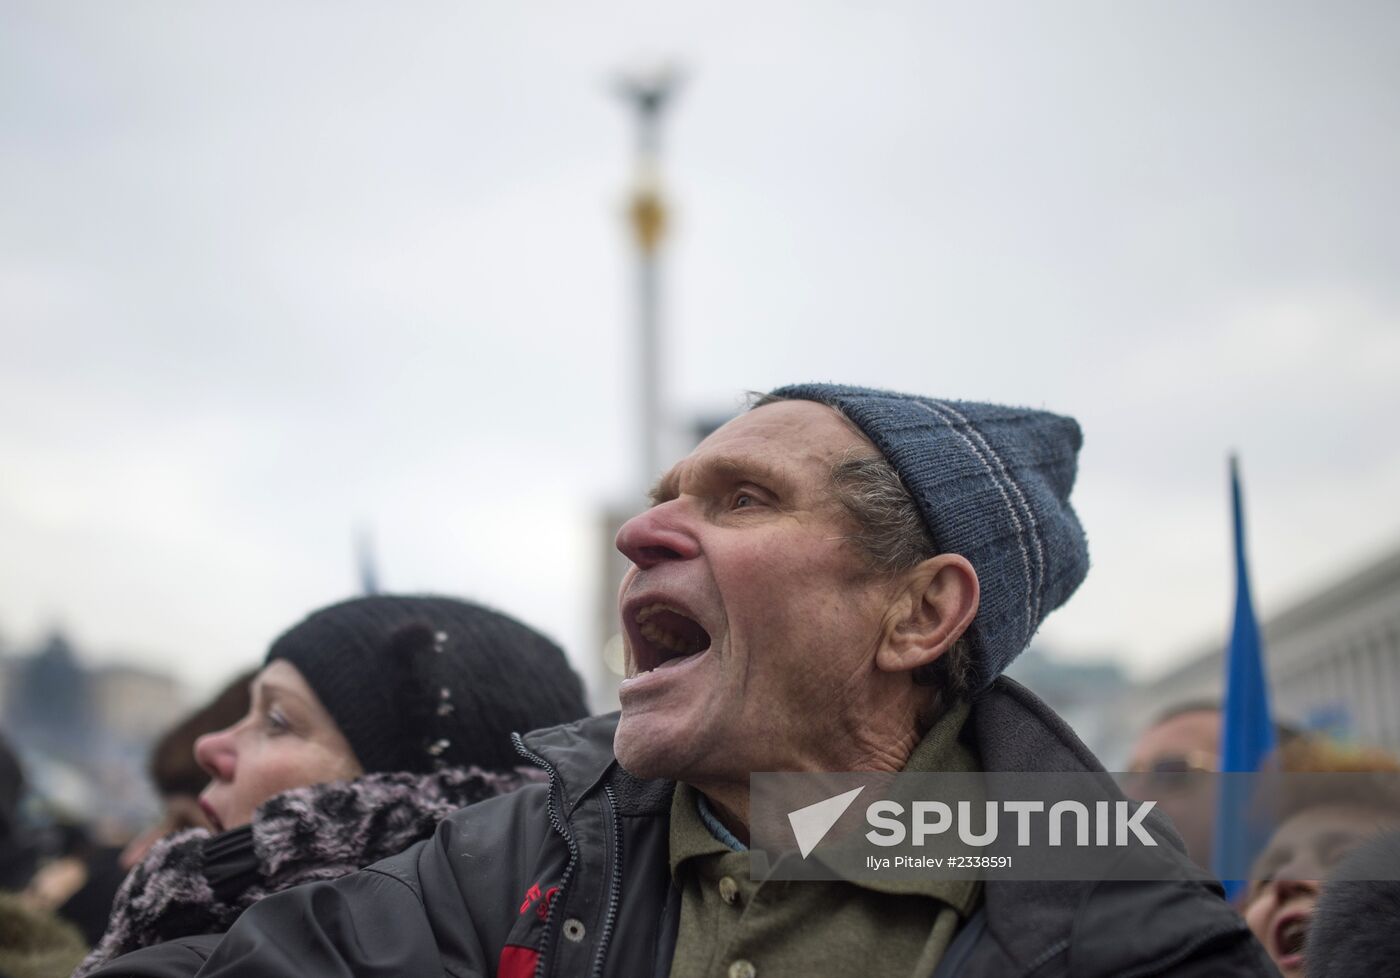 Supporters of pro-EU integration hold Dignity Day rally on Kiev's Maidan Nezalezhnosti